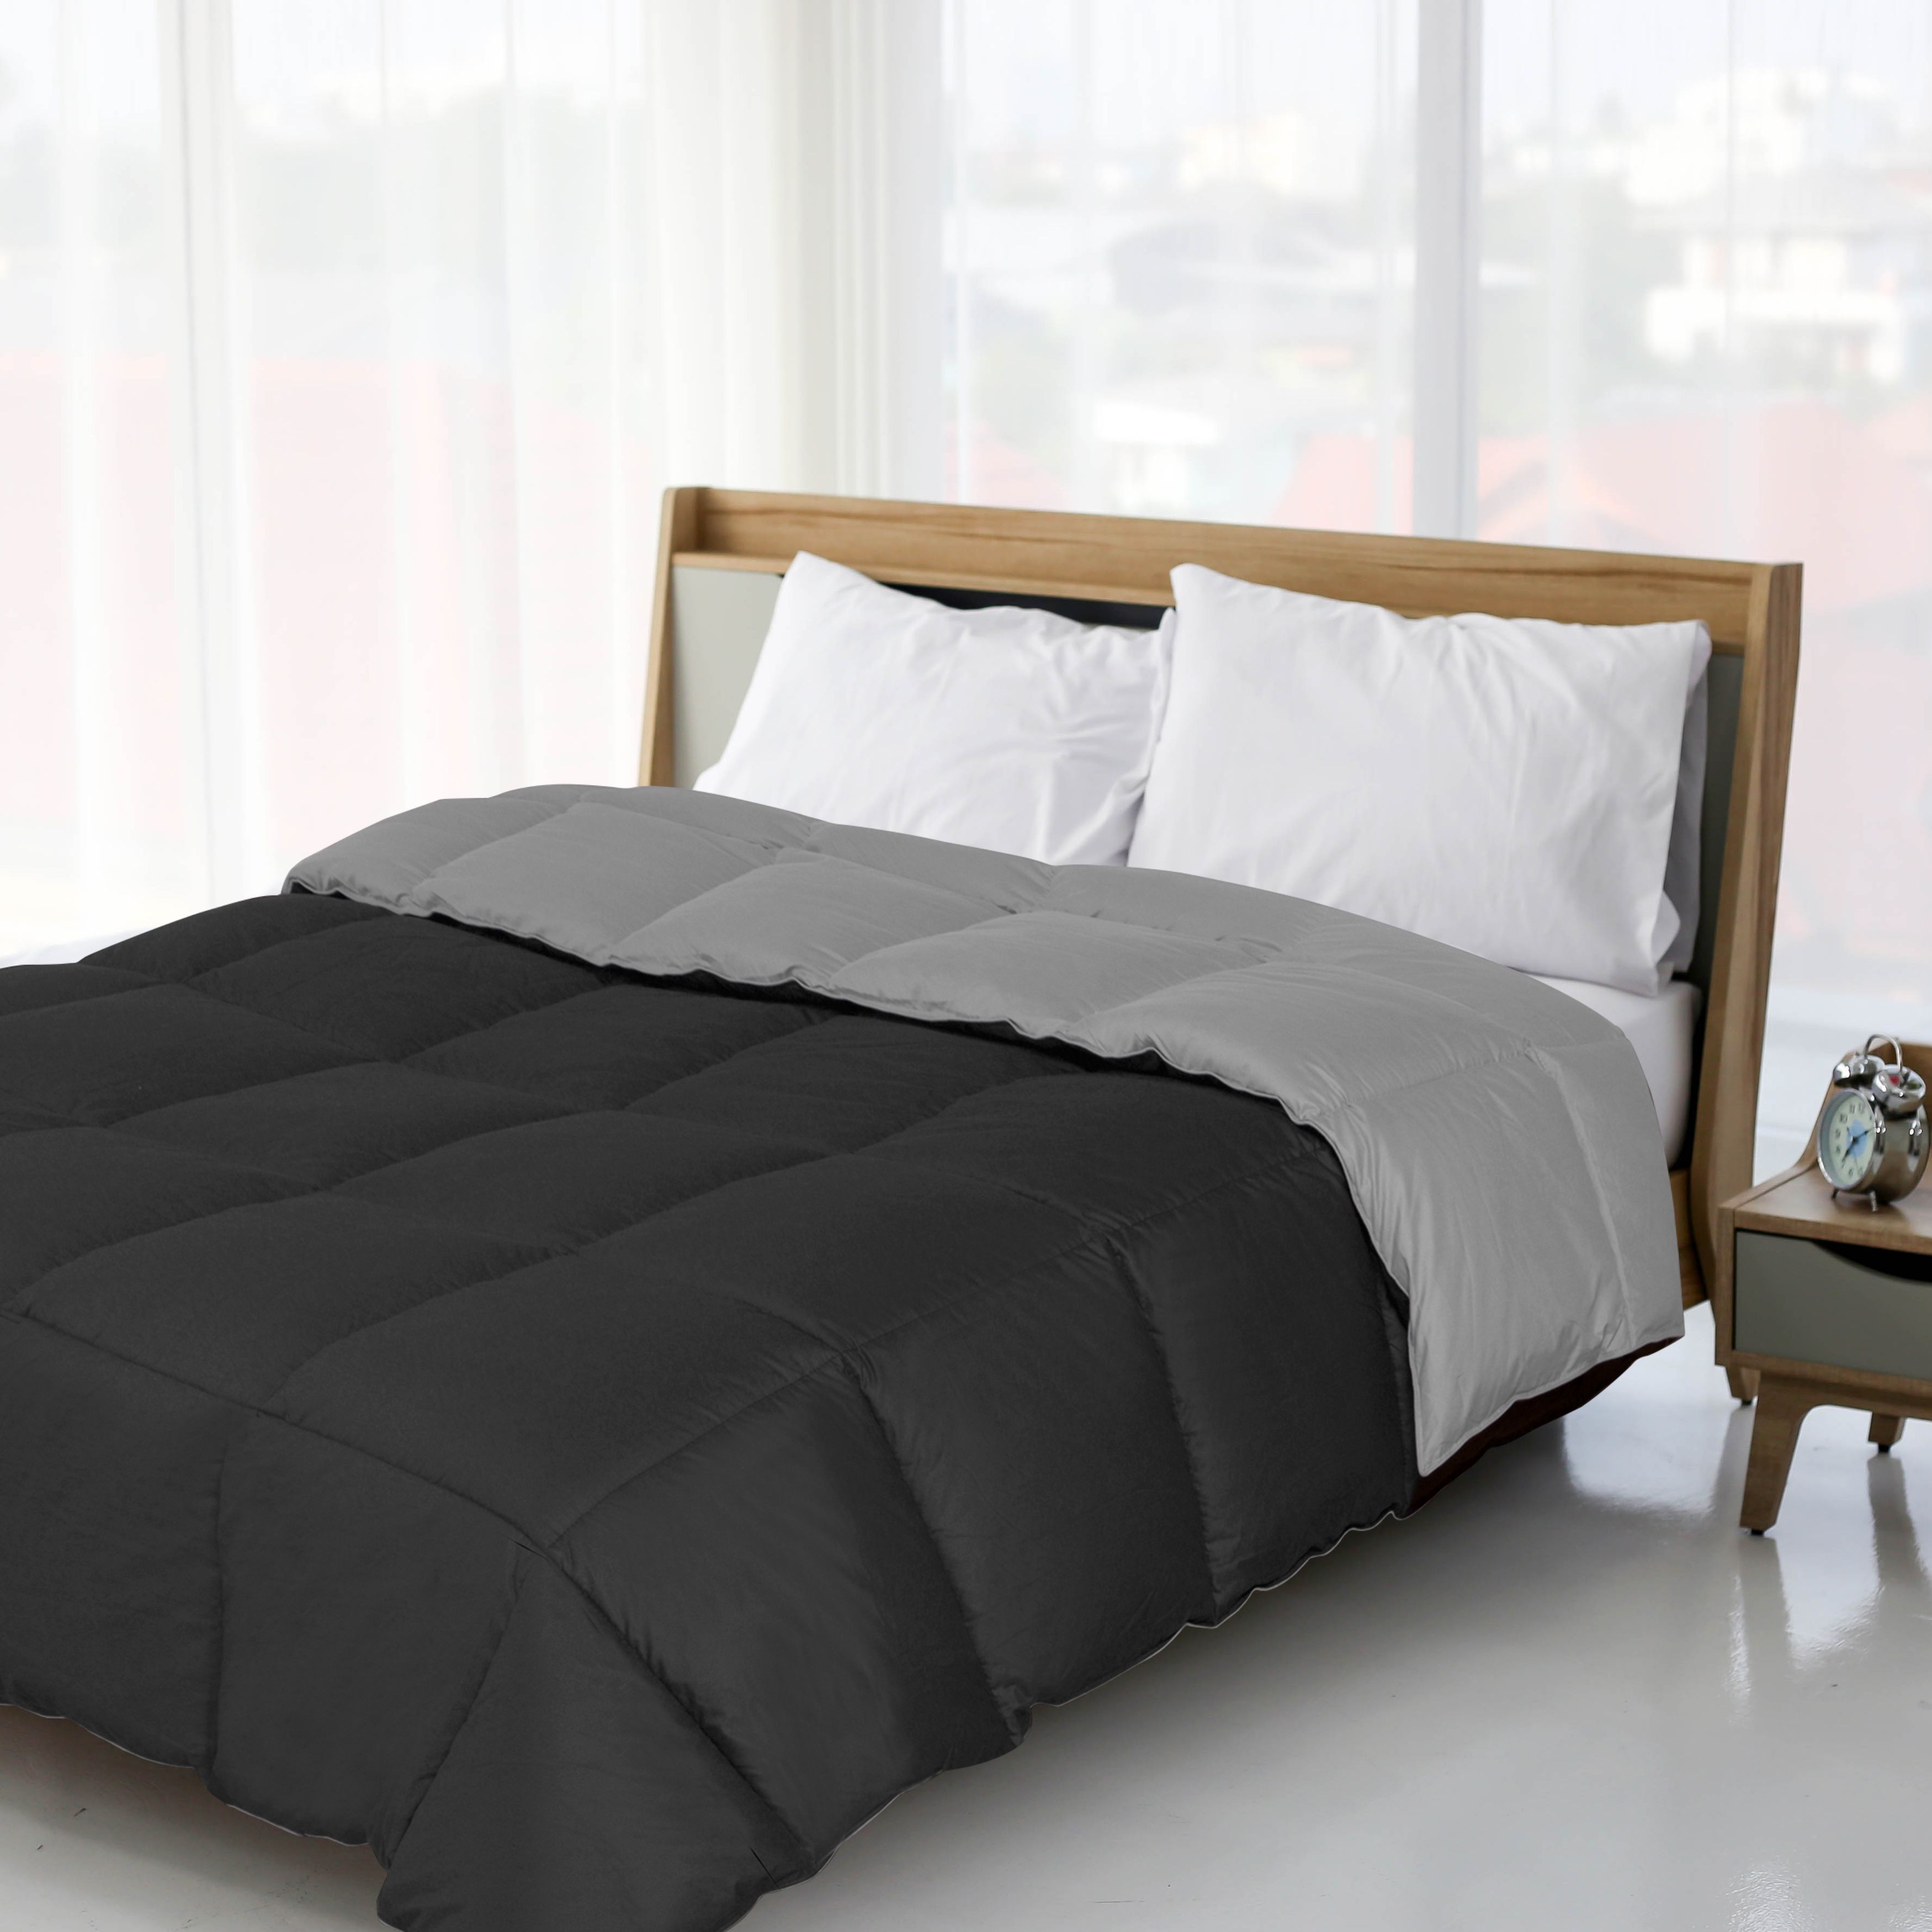 Superior Down Alternative Reversible Comforter, King, Black/ Grey - image 2 of 3